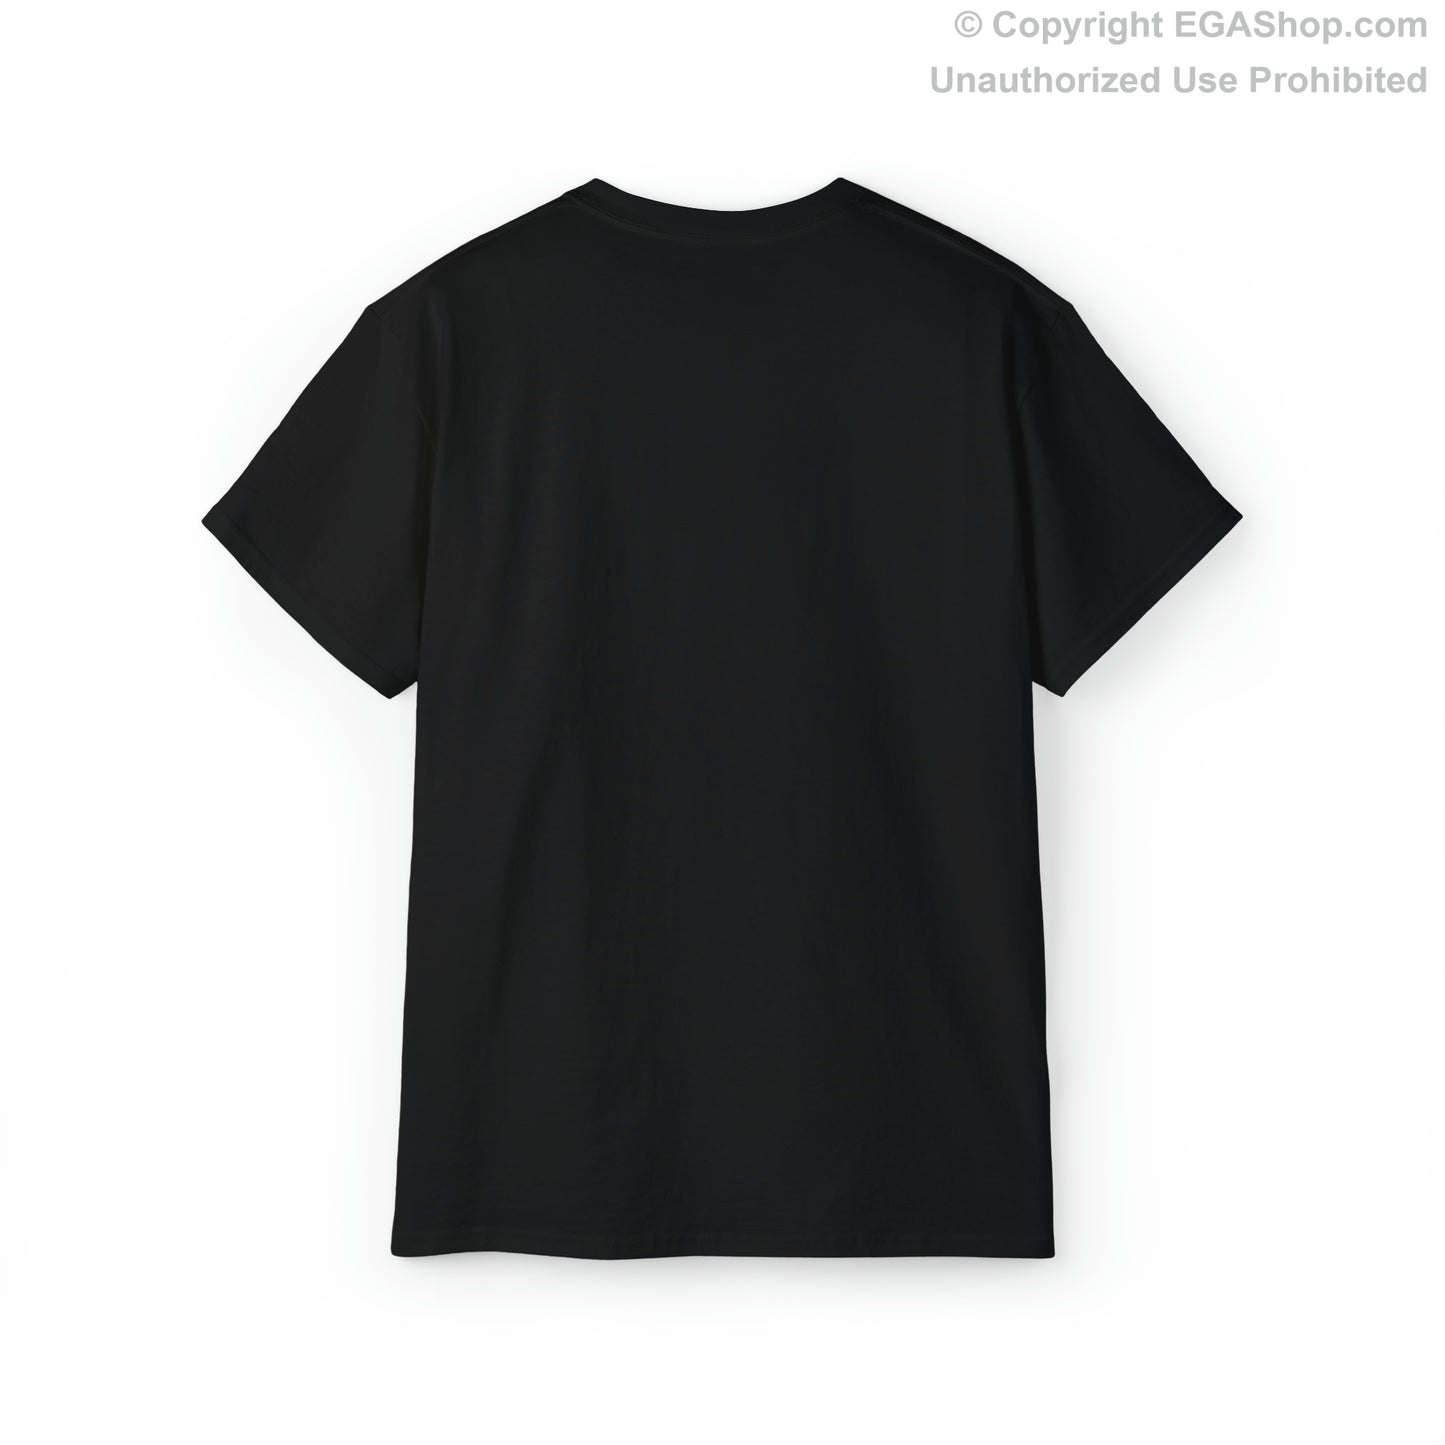 T-Shirt: Mike Co. MCRD Parris Island (EGA, Blank Back)